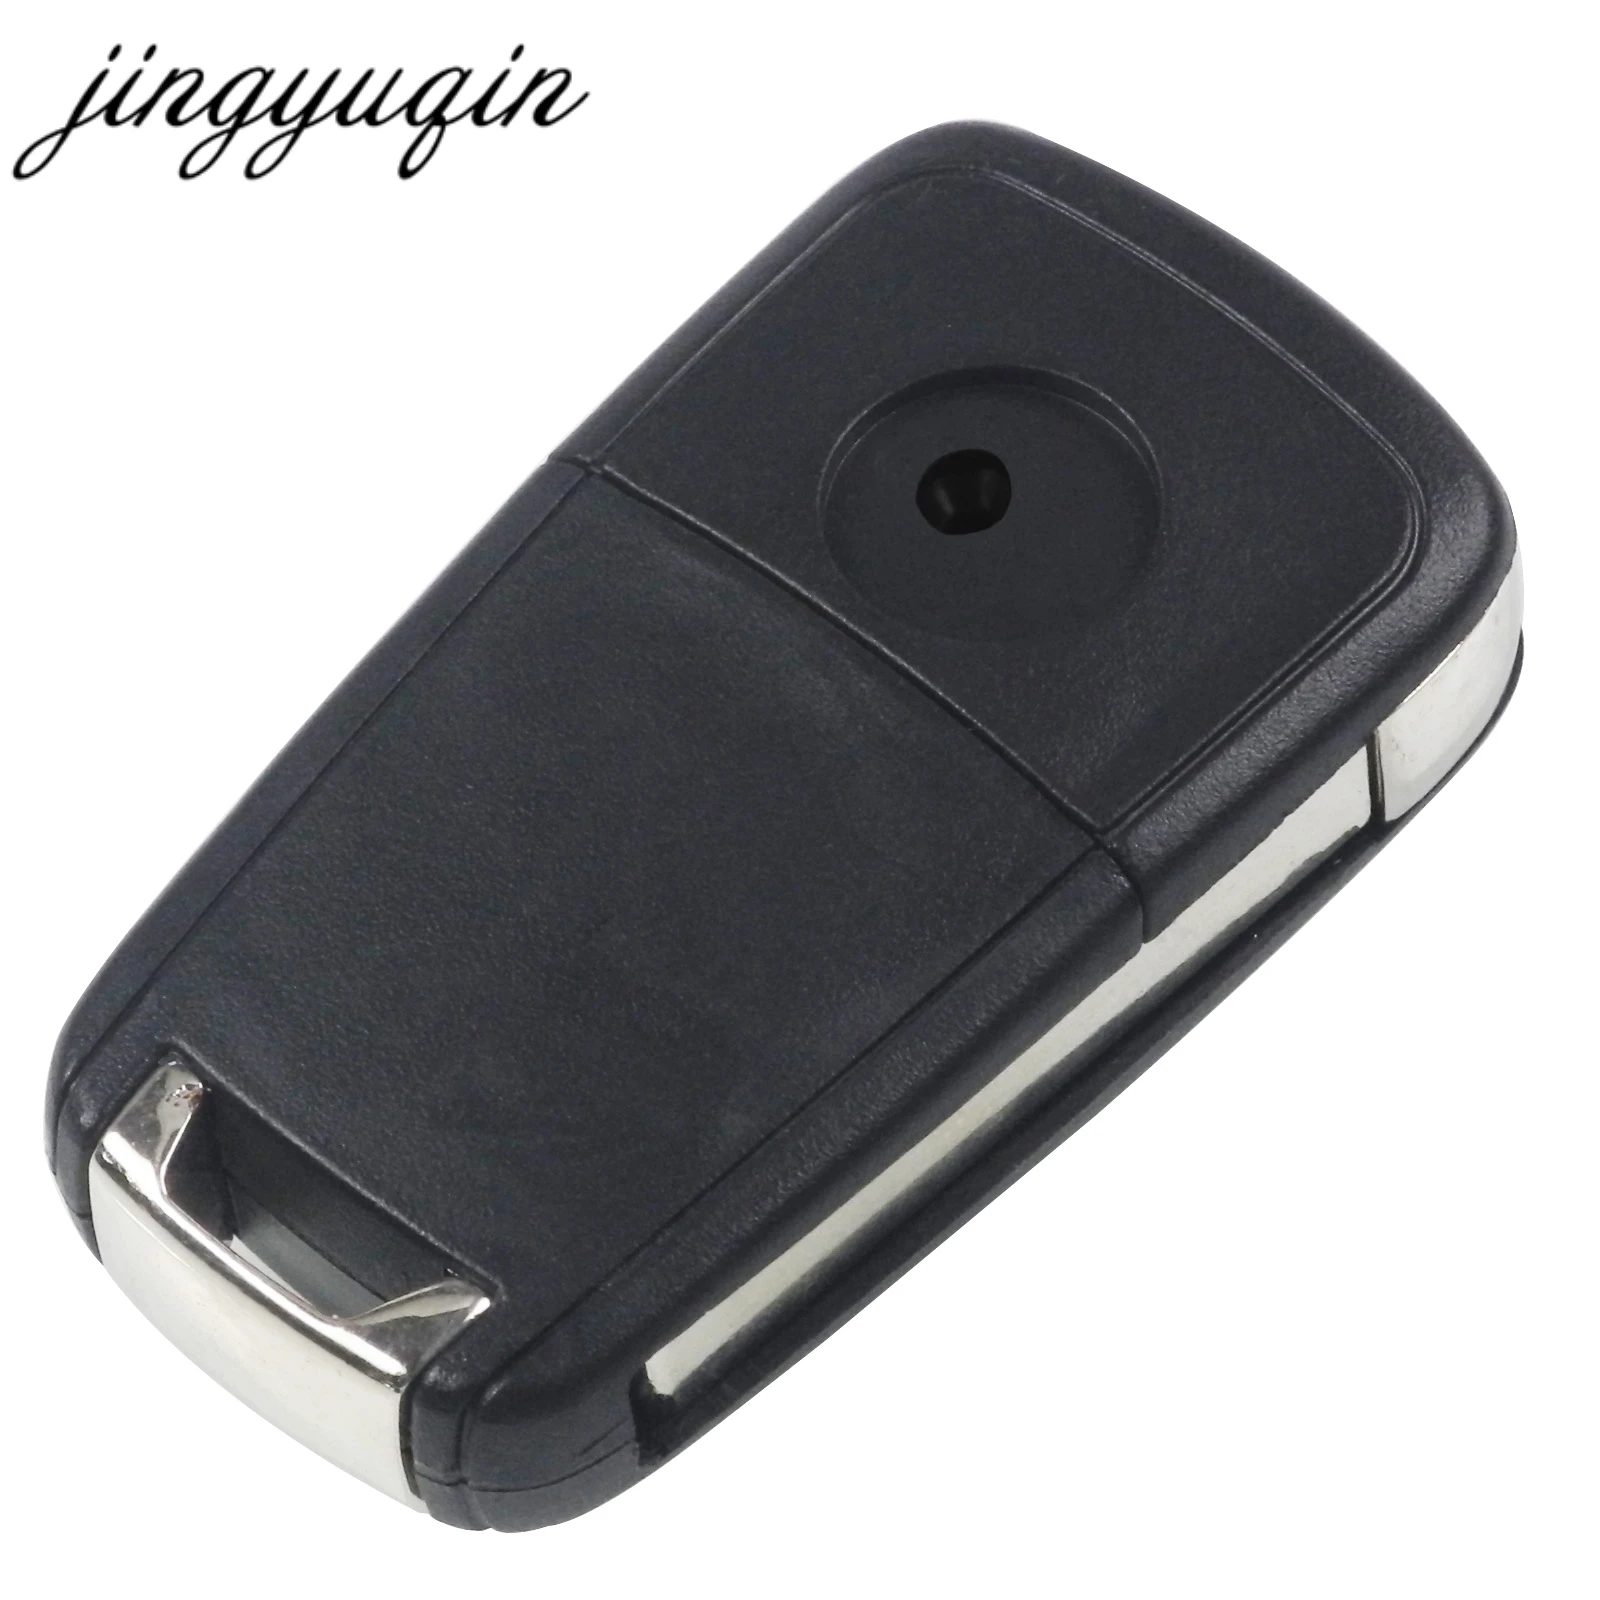 Jingyuqin откидной складной пульт дистанционного ключа оболочки Брелок чехол для Vauxhall Opel Zafira Astra Insignia Holden 2/3 кнопки